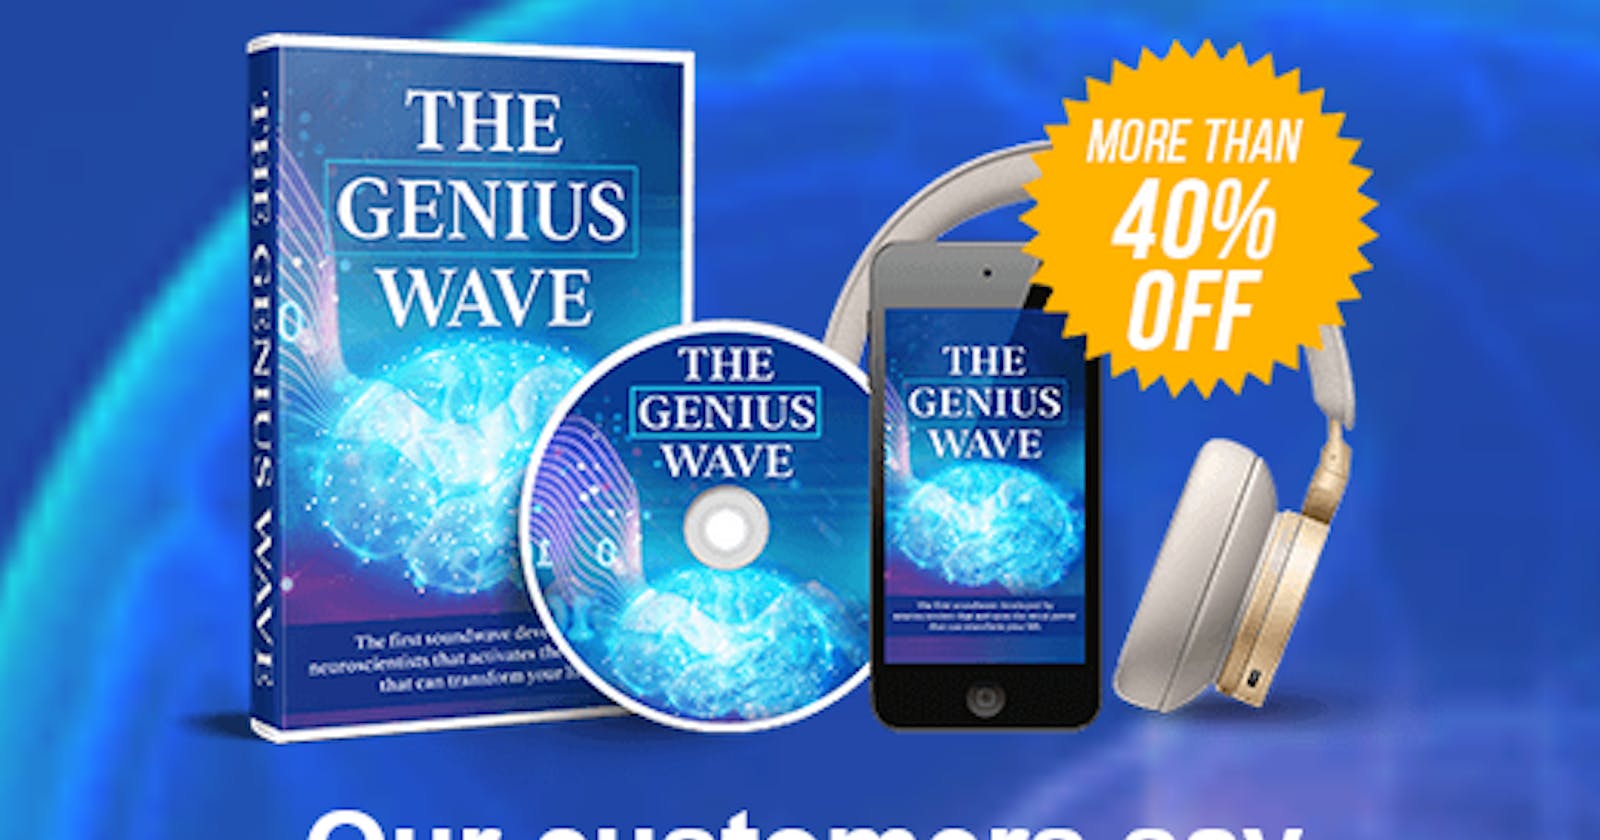 The Genius Wave Audio Program SCAM EXPOSED By People!